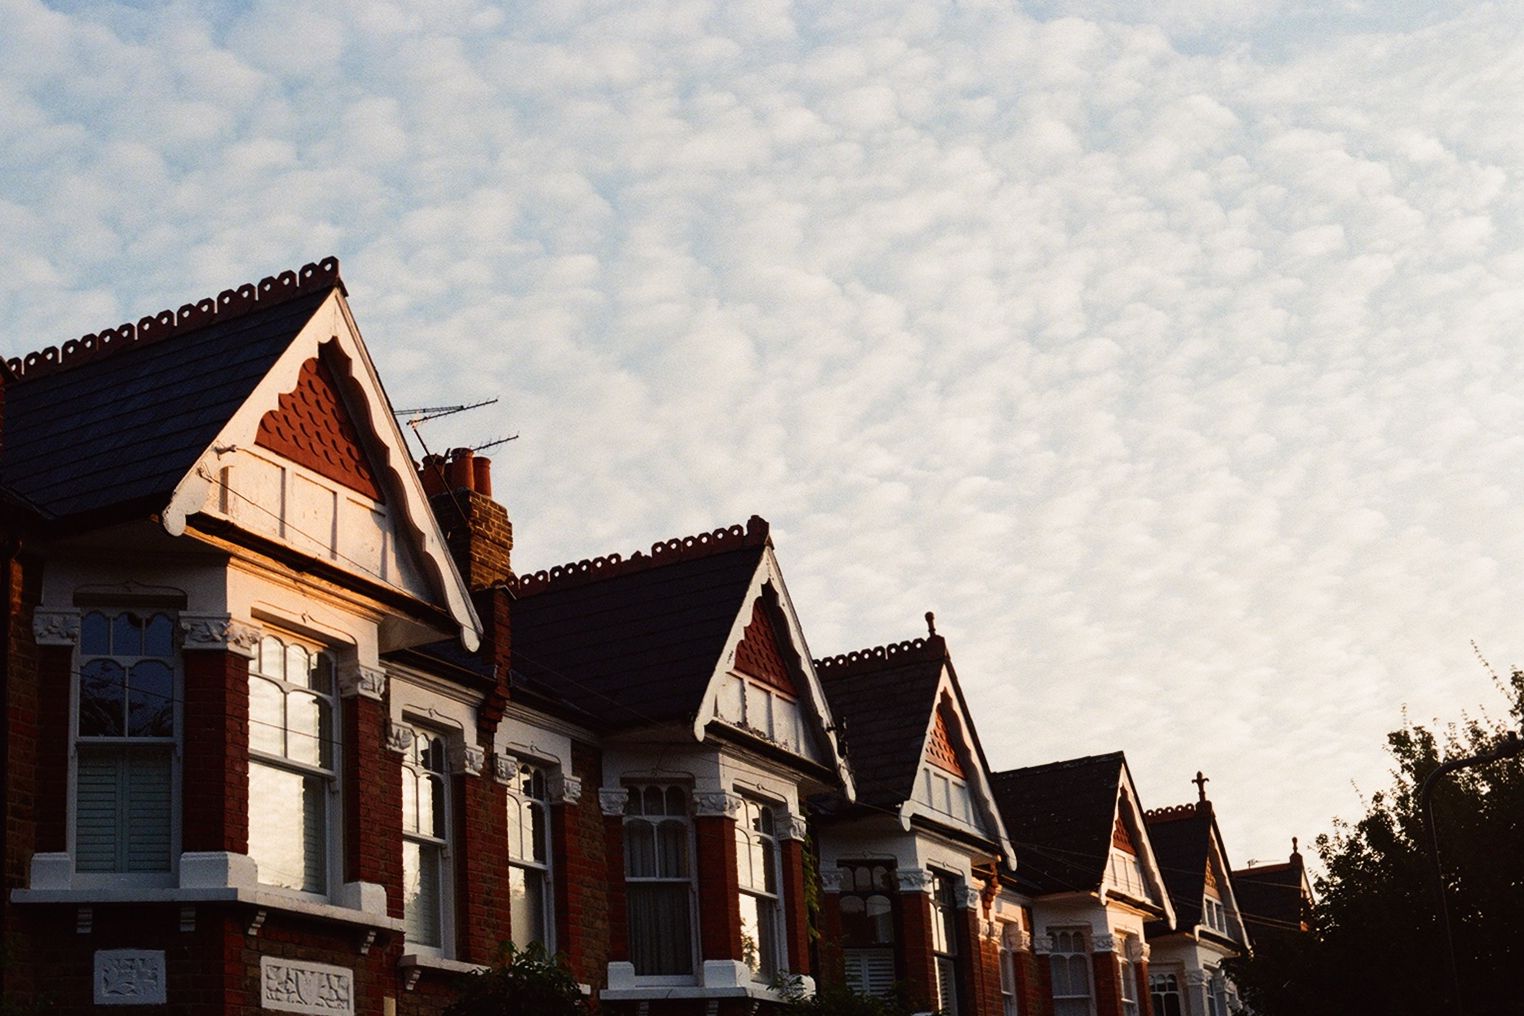 Houses near Queen's Park, London (Kodak Ultramax 400)